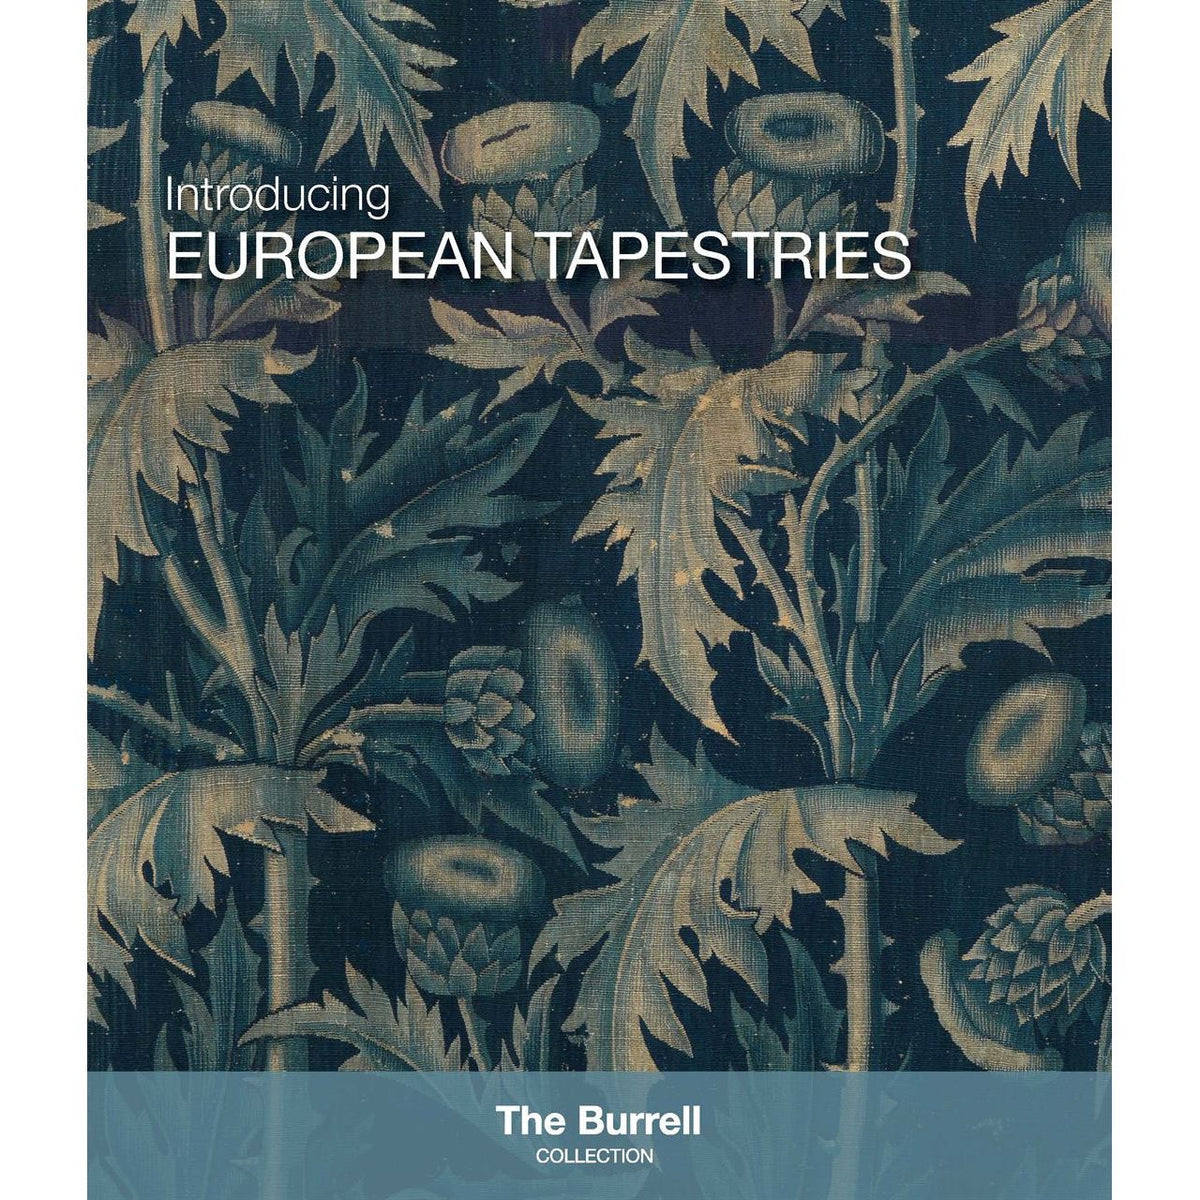 Introducing European Tapestries